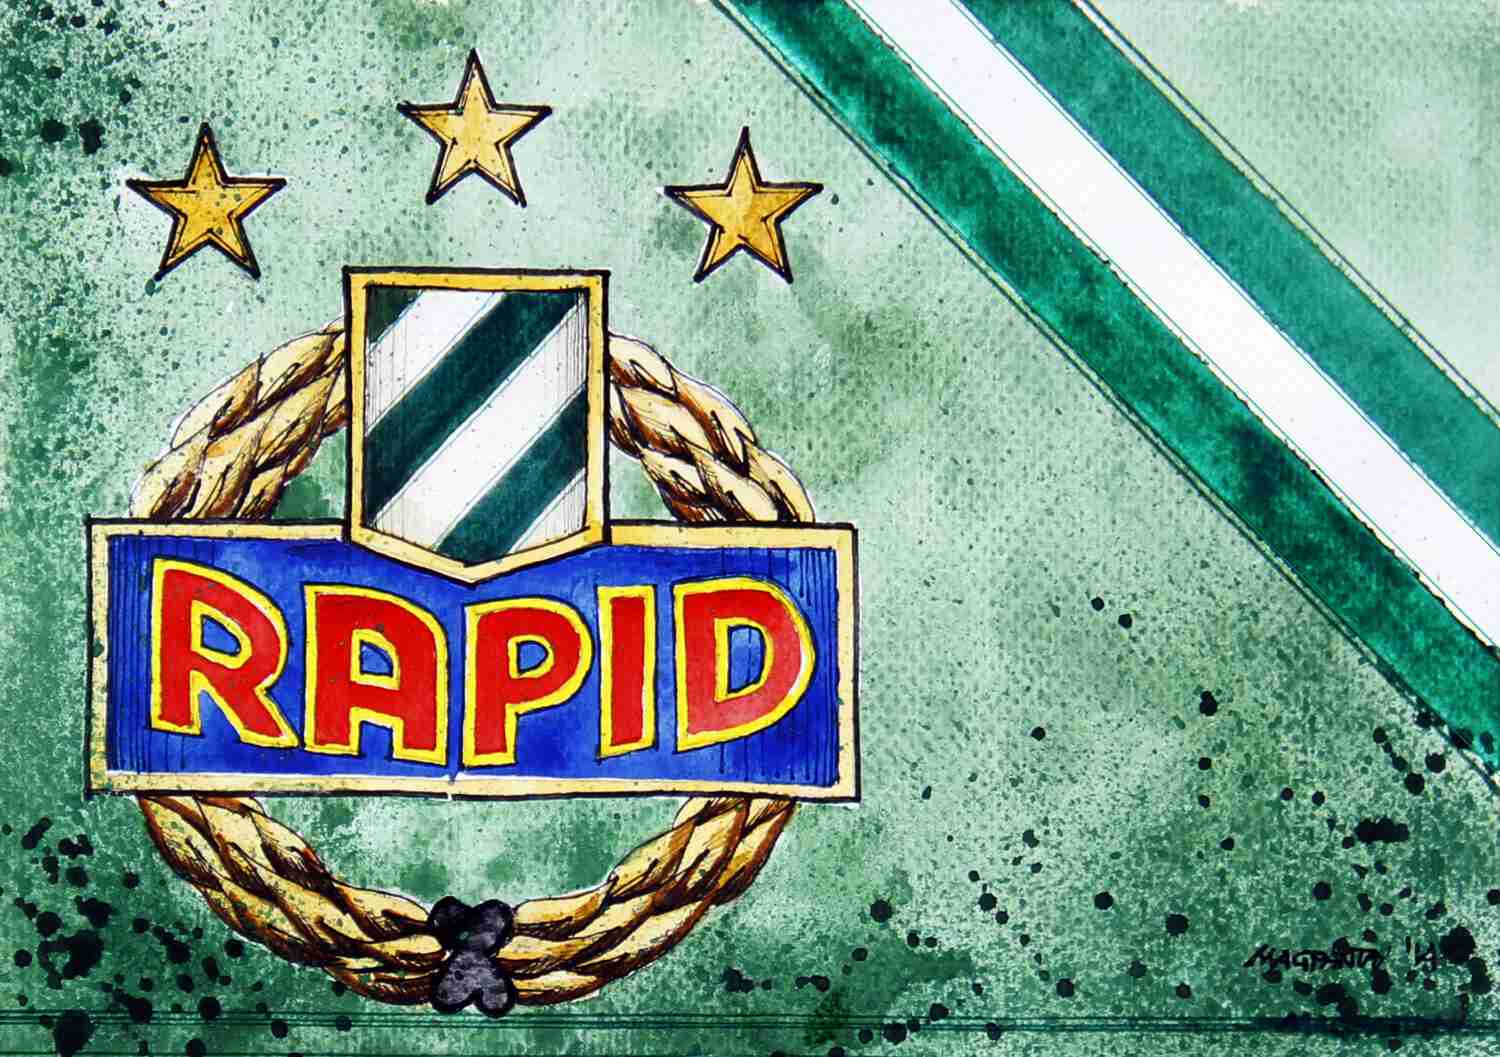 _SK Rapid Wien - Wappen mit Farben